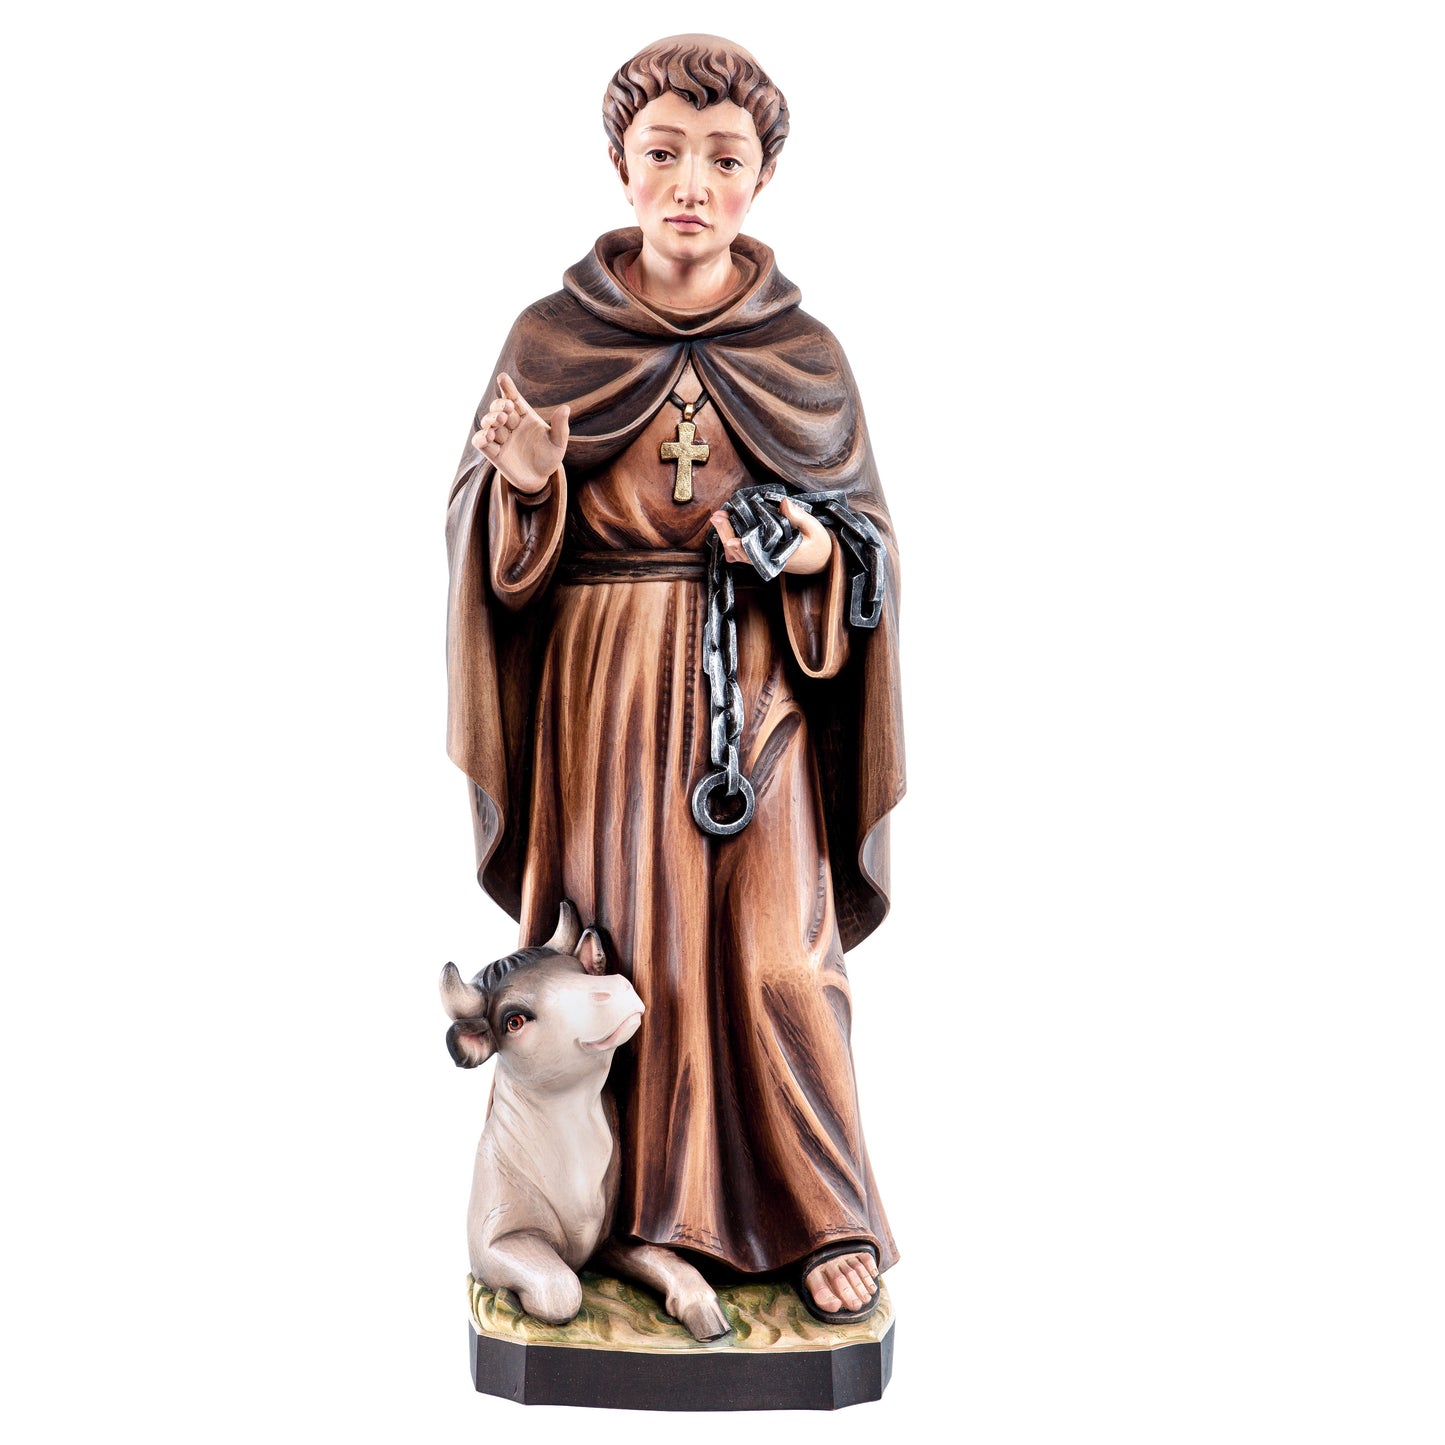 MONDO CATTOLICO Colored / 10 cm (3.9 in) Wooden Statue of St. Leonard of Noblac